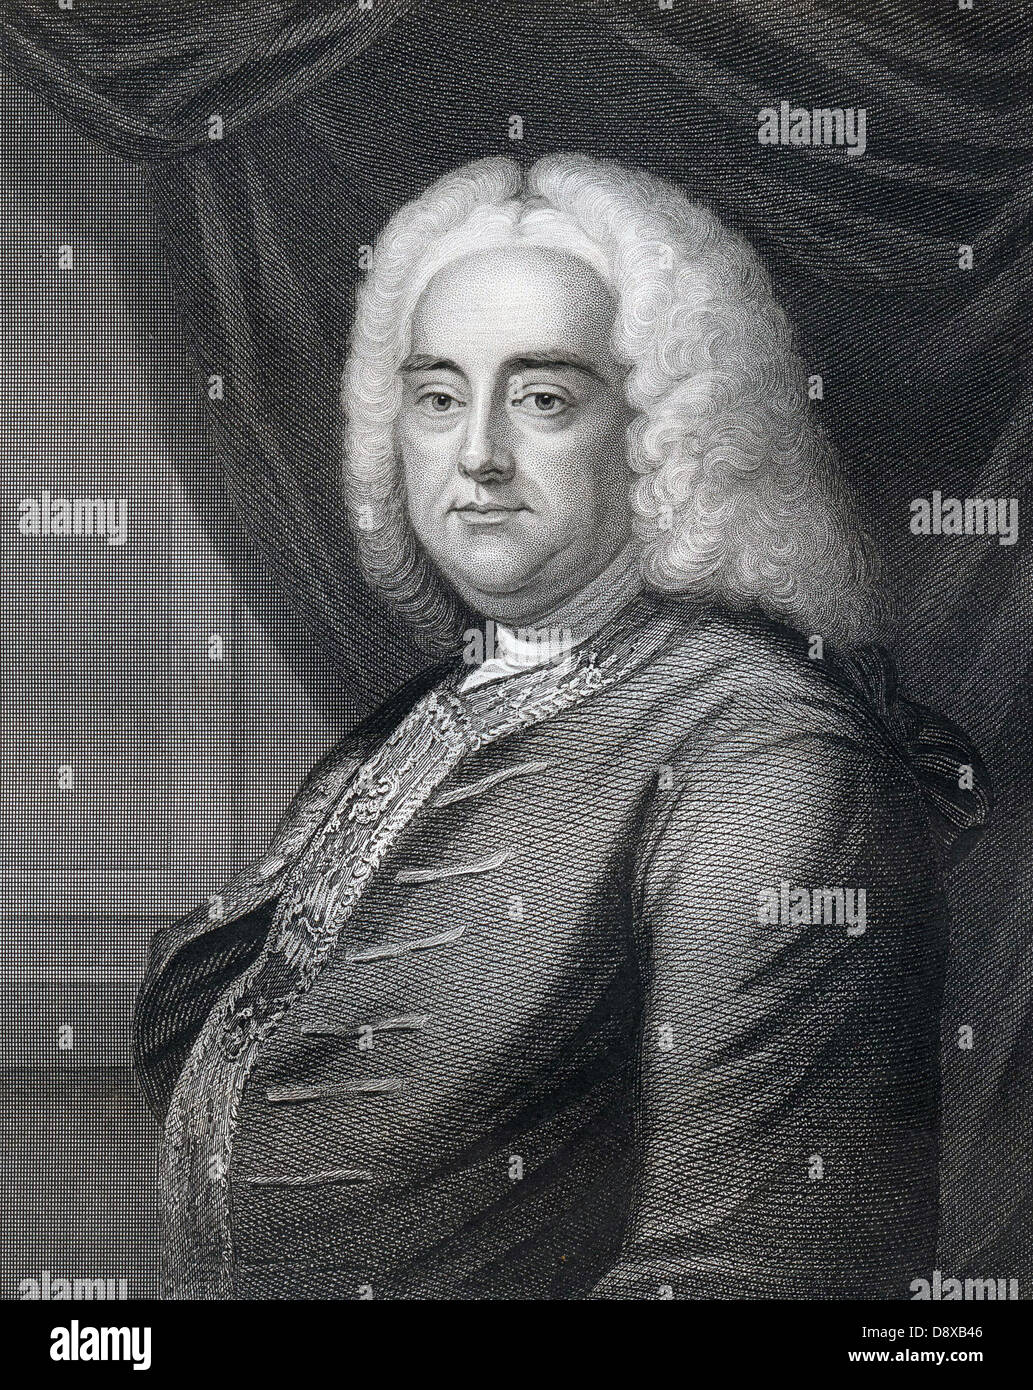 George Frideric Handel, compositeur baroque britannique (1685 - 1759) Banque D'Images